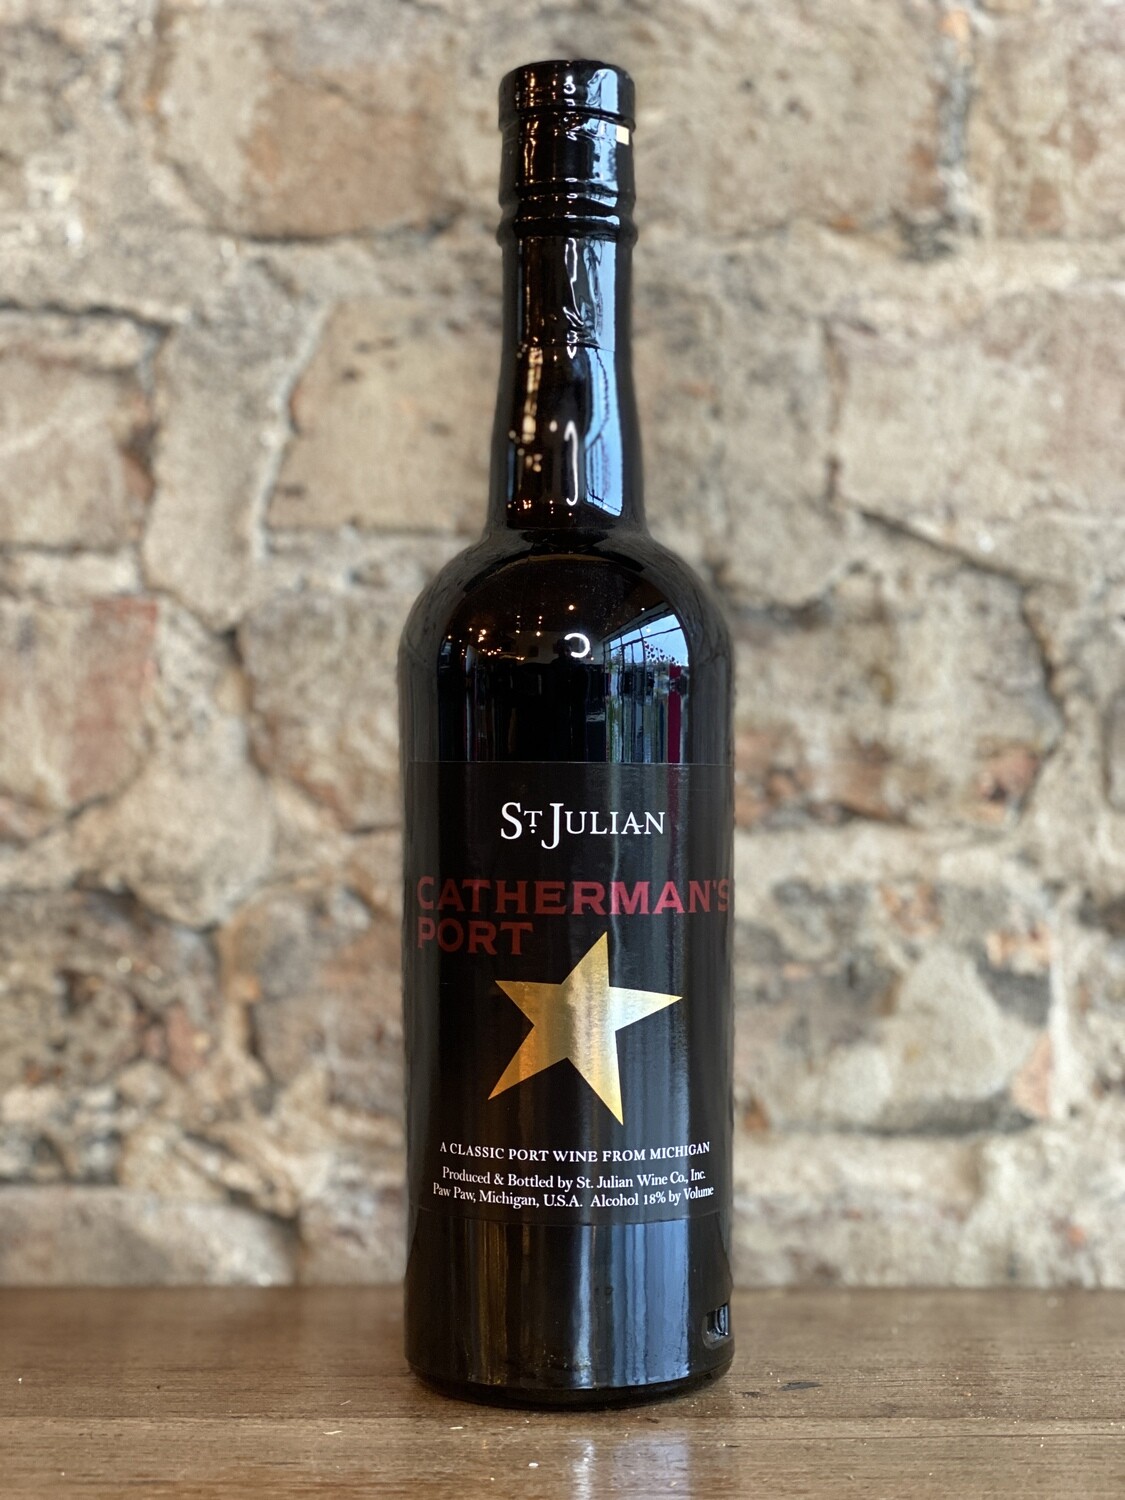 St. Julian Catherman's Port-Bottle